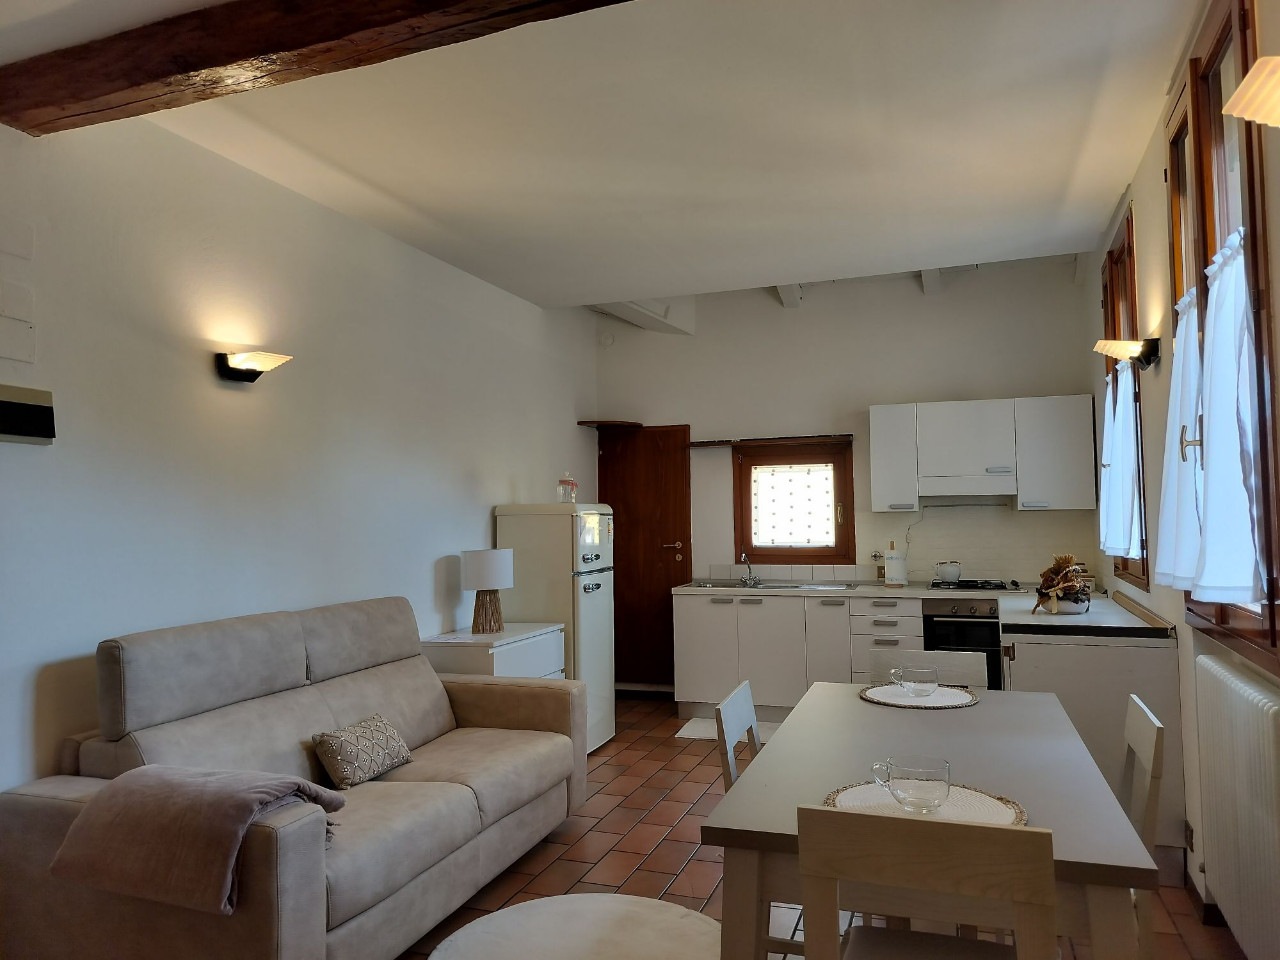 Affitto - Appartamento - Sant Isaia - Bologna - € 850